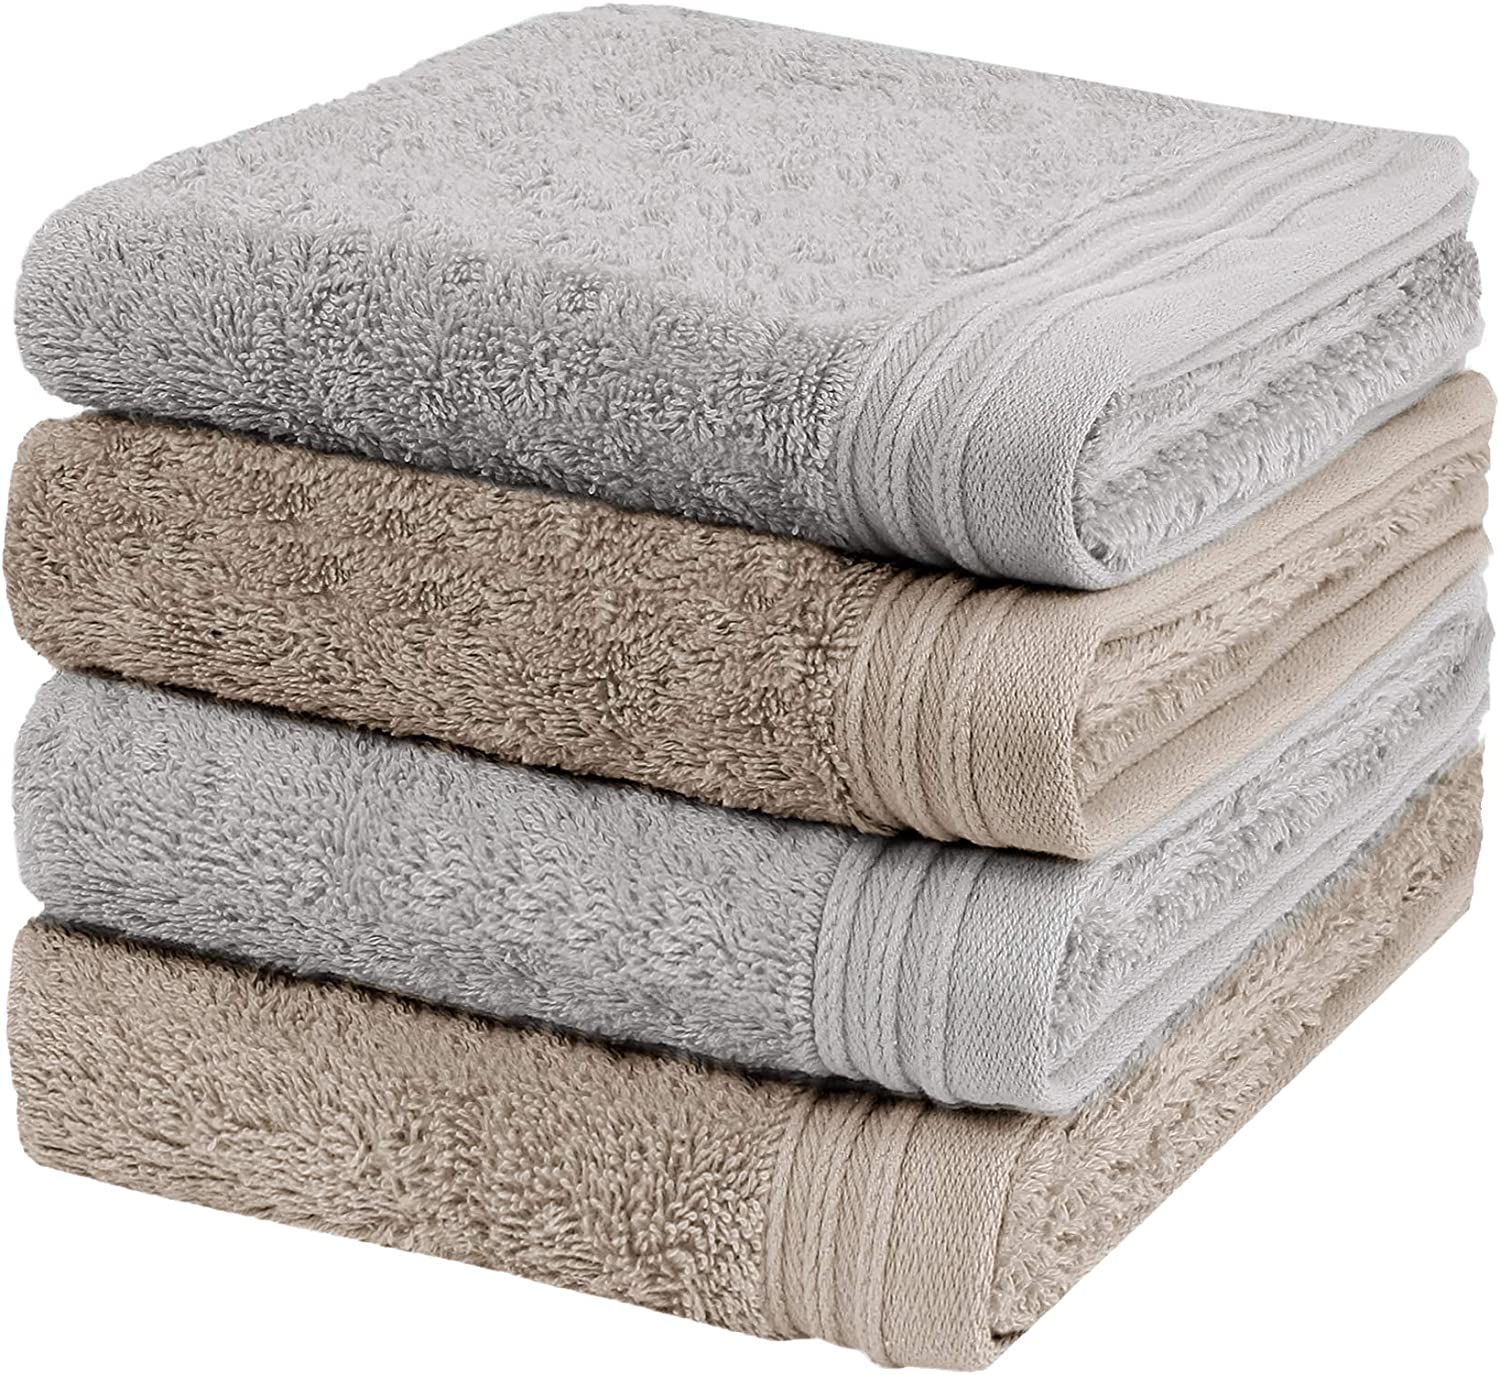  Weidemans Premium Towel Set of 4 Hand Towels 18 x 30